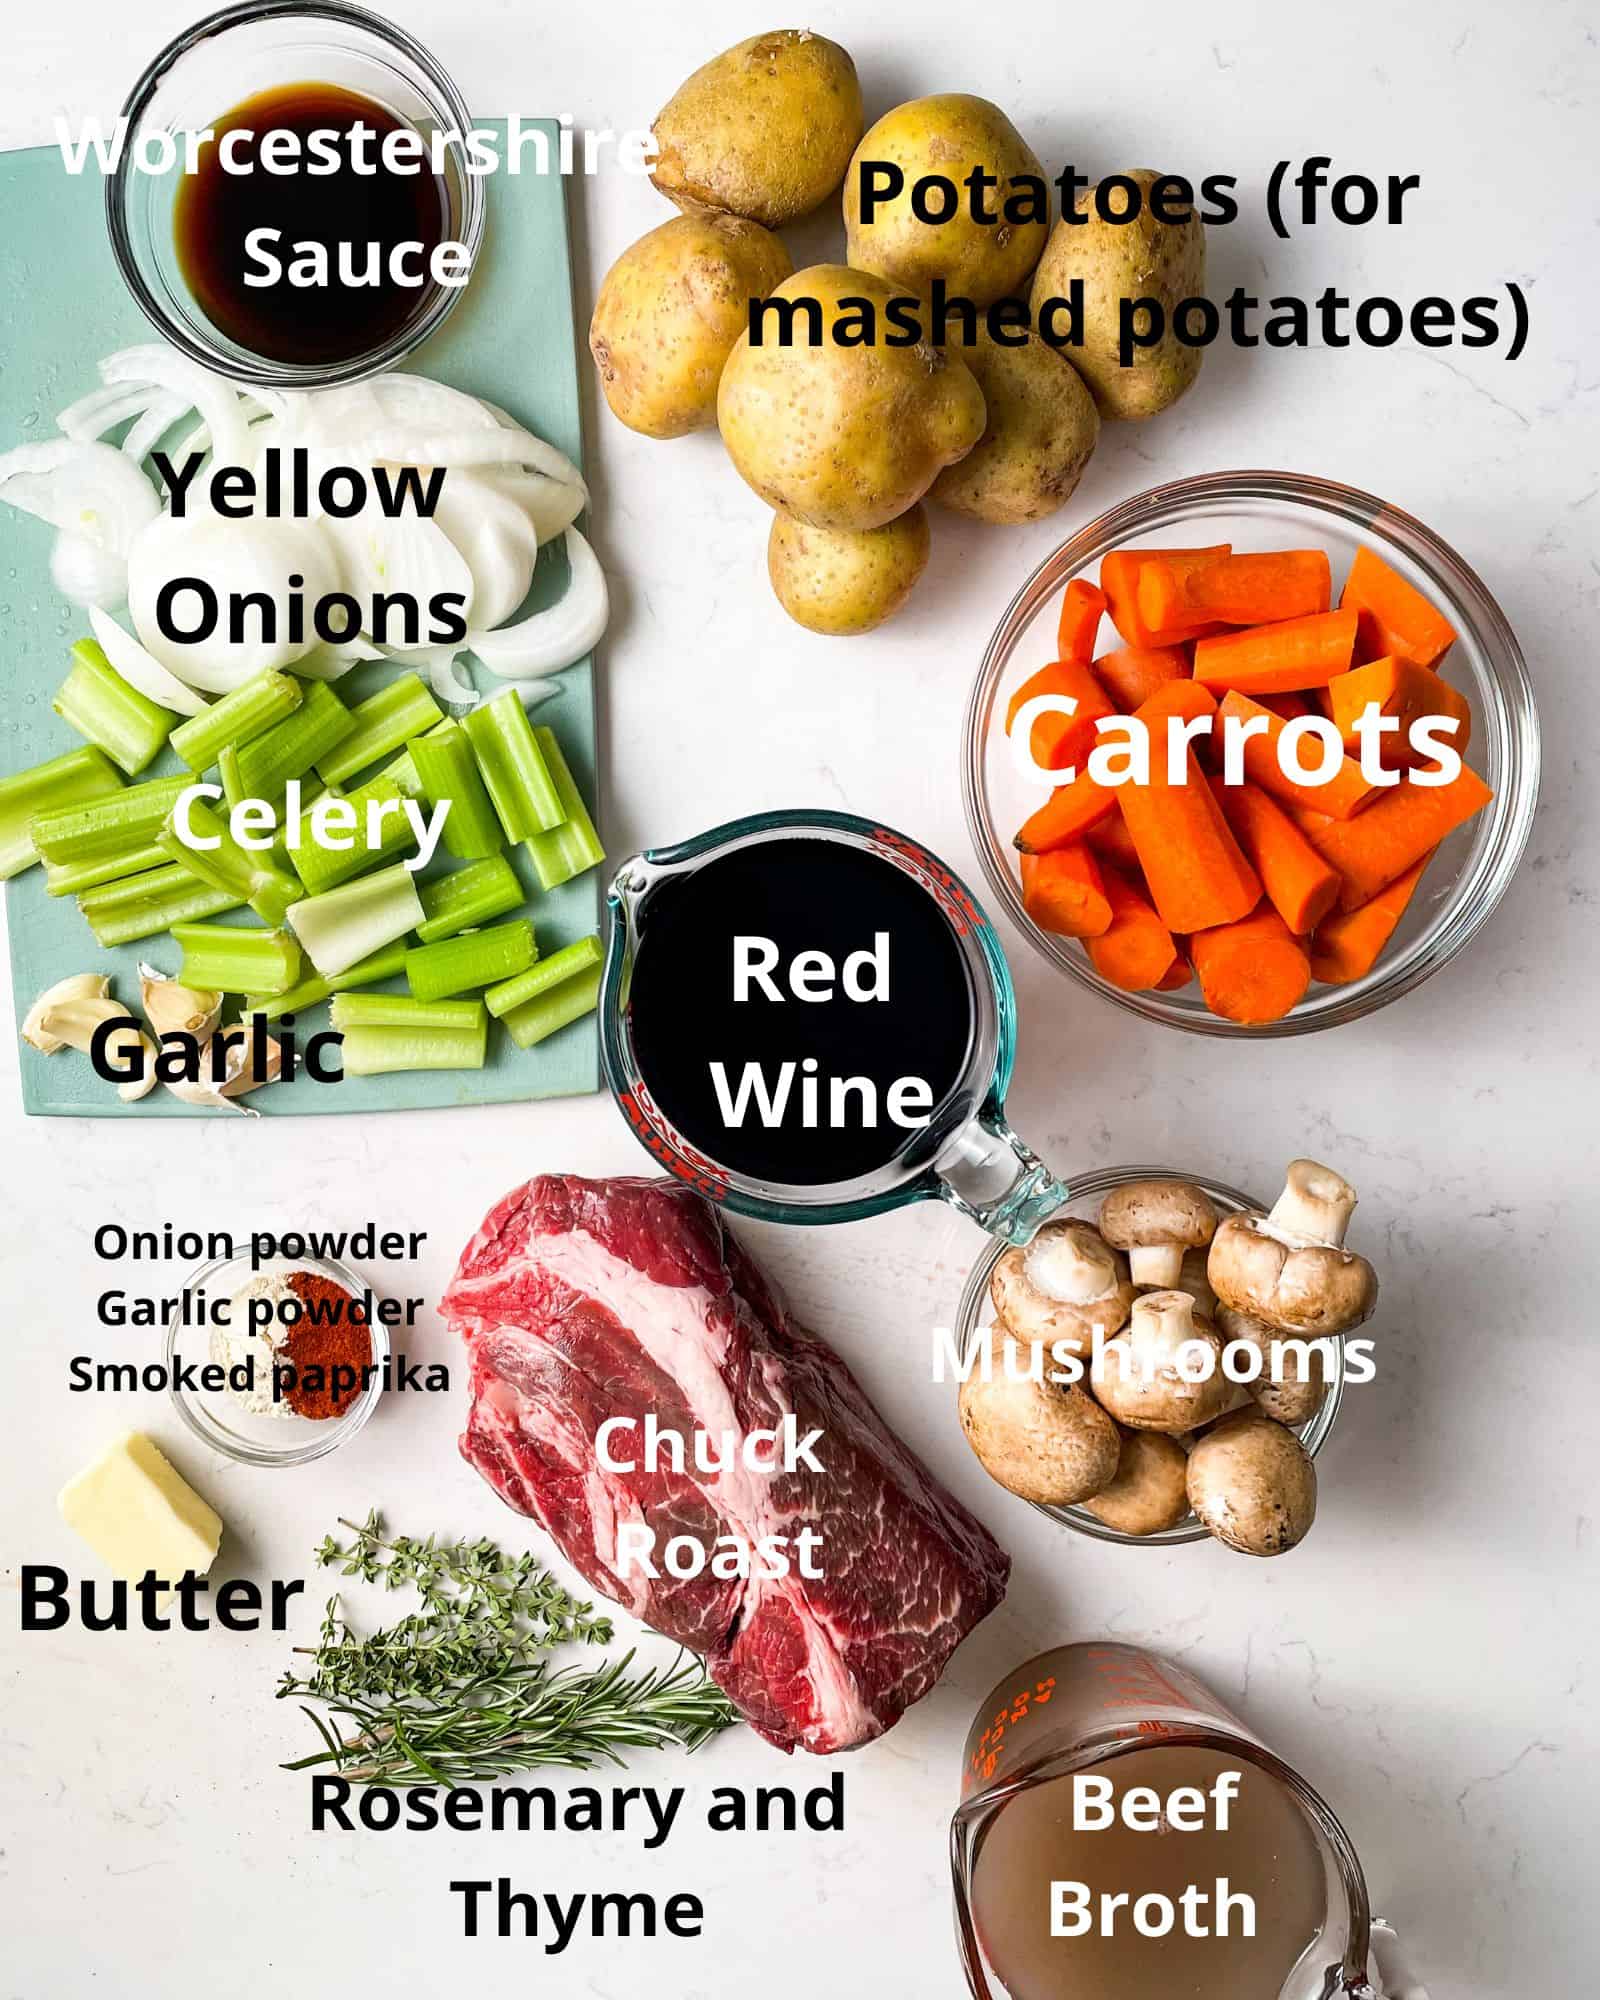 ingredients to make oven baked chuck roast - chuck roast, seasonings, onion, garlic, celery, carrots, fresh herbs, beef broth, red wine, Worcestershire sauce, and mushrooms.